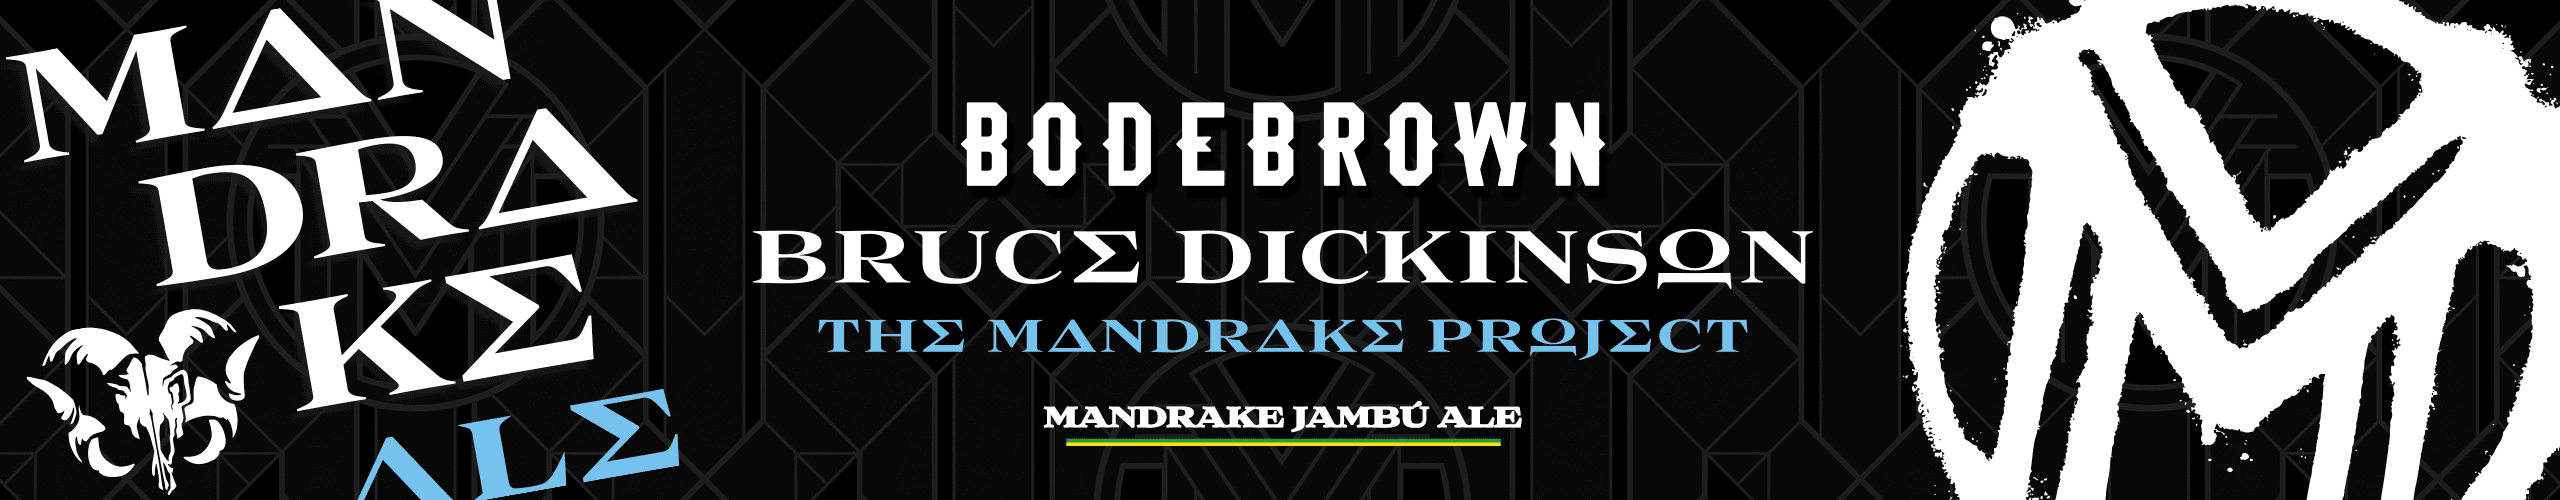 Bruce Dickinson Mandrake Jambu Ale